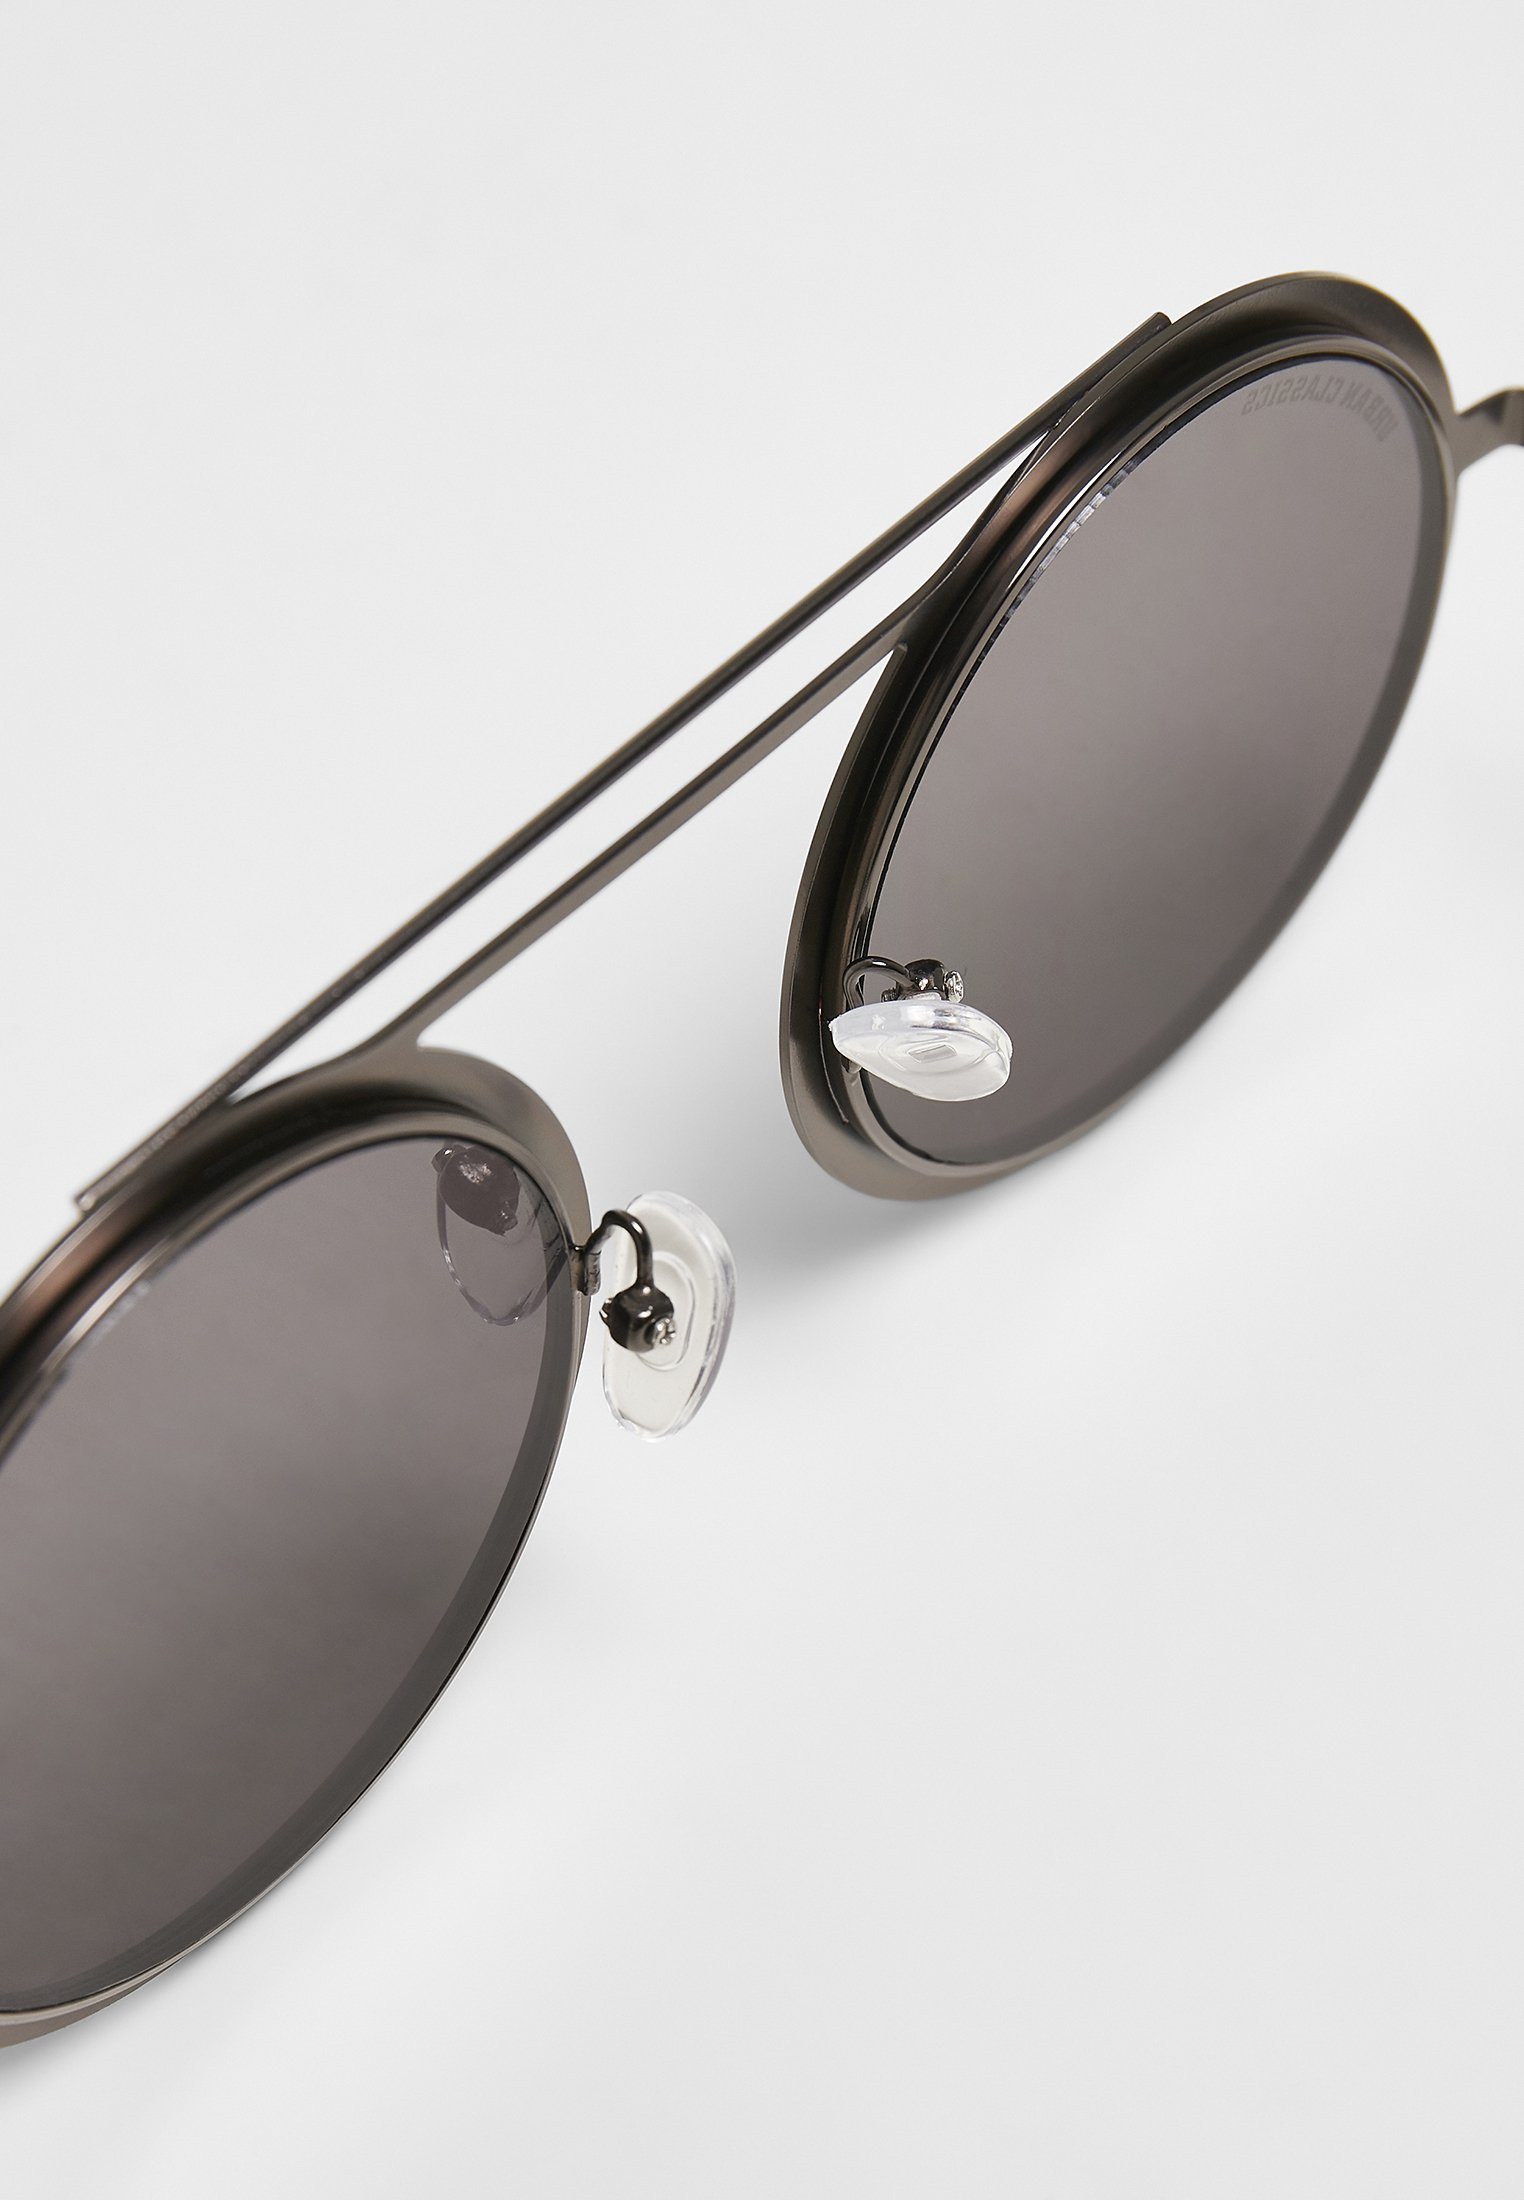 UC gunmetal/black CLASSICS Sunglasses URBAN 104 Sonnenbrille Accessoires